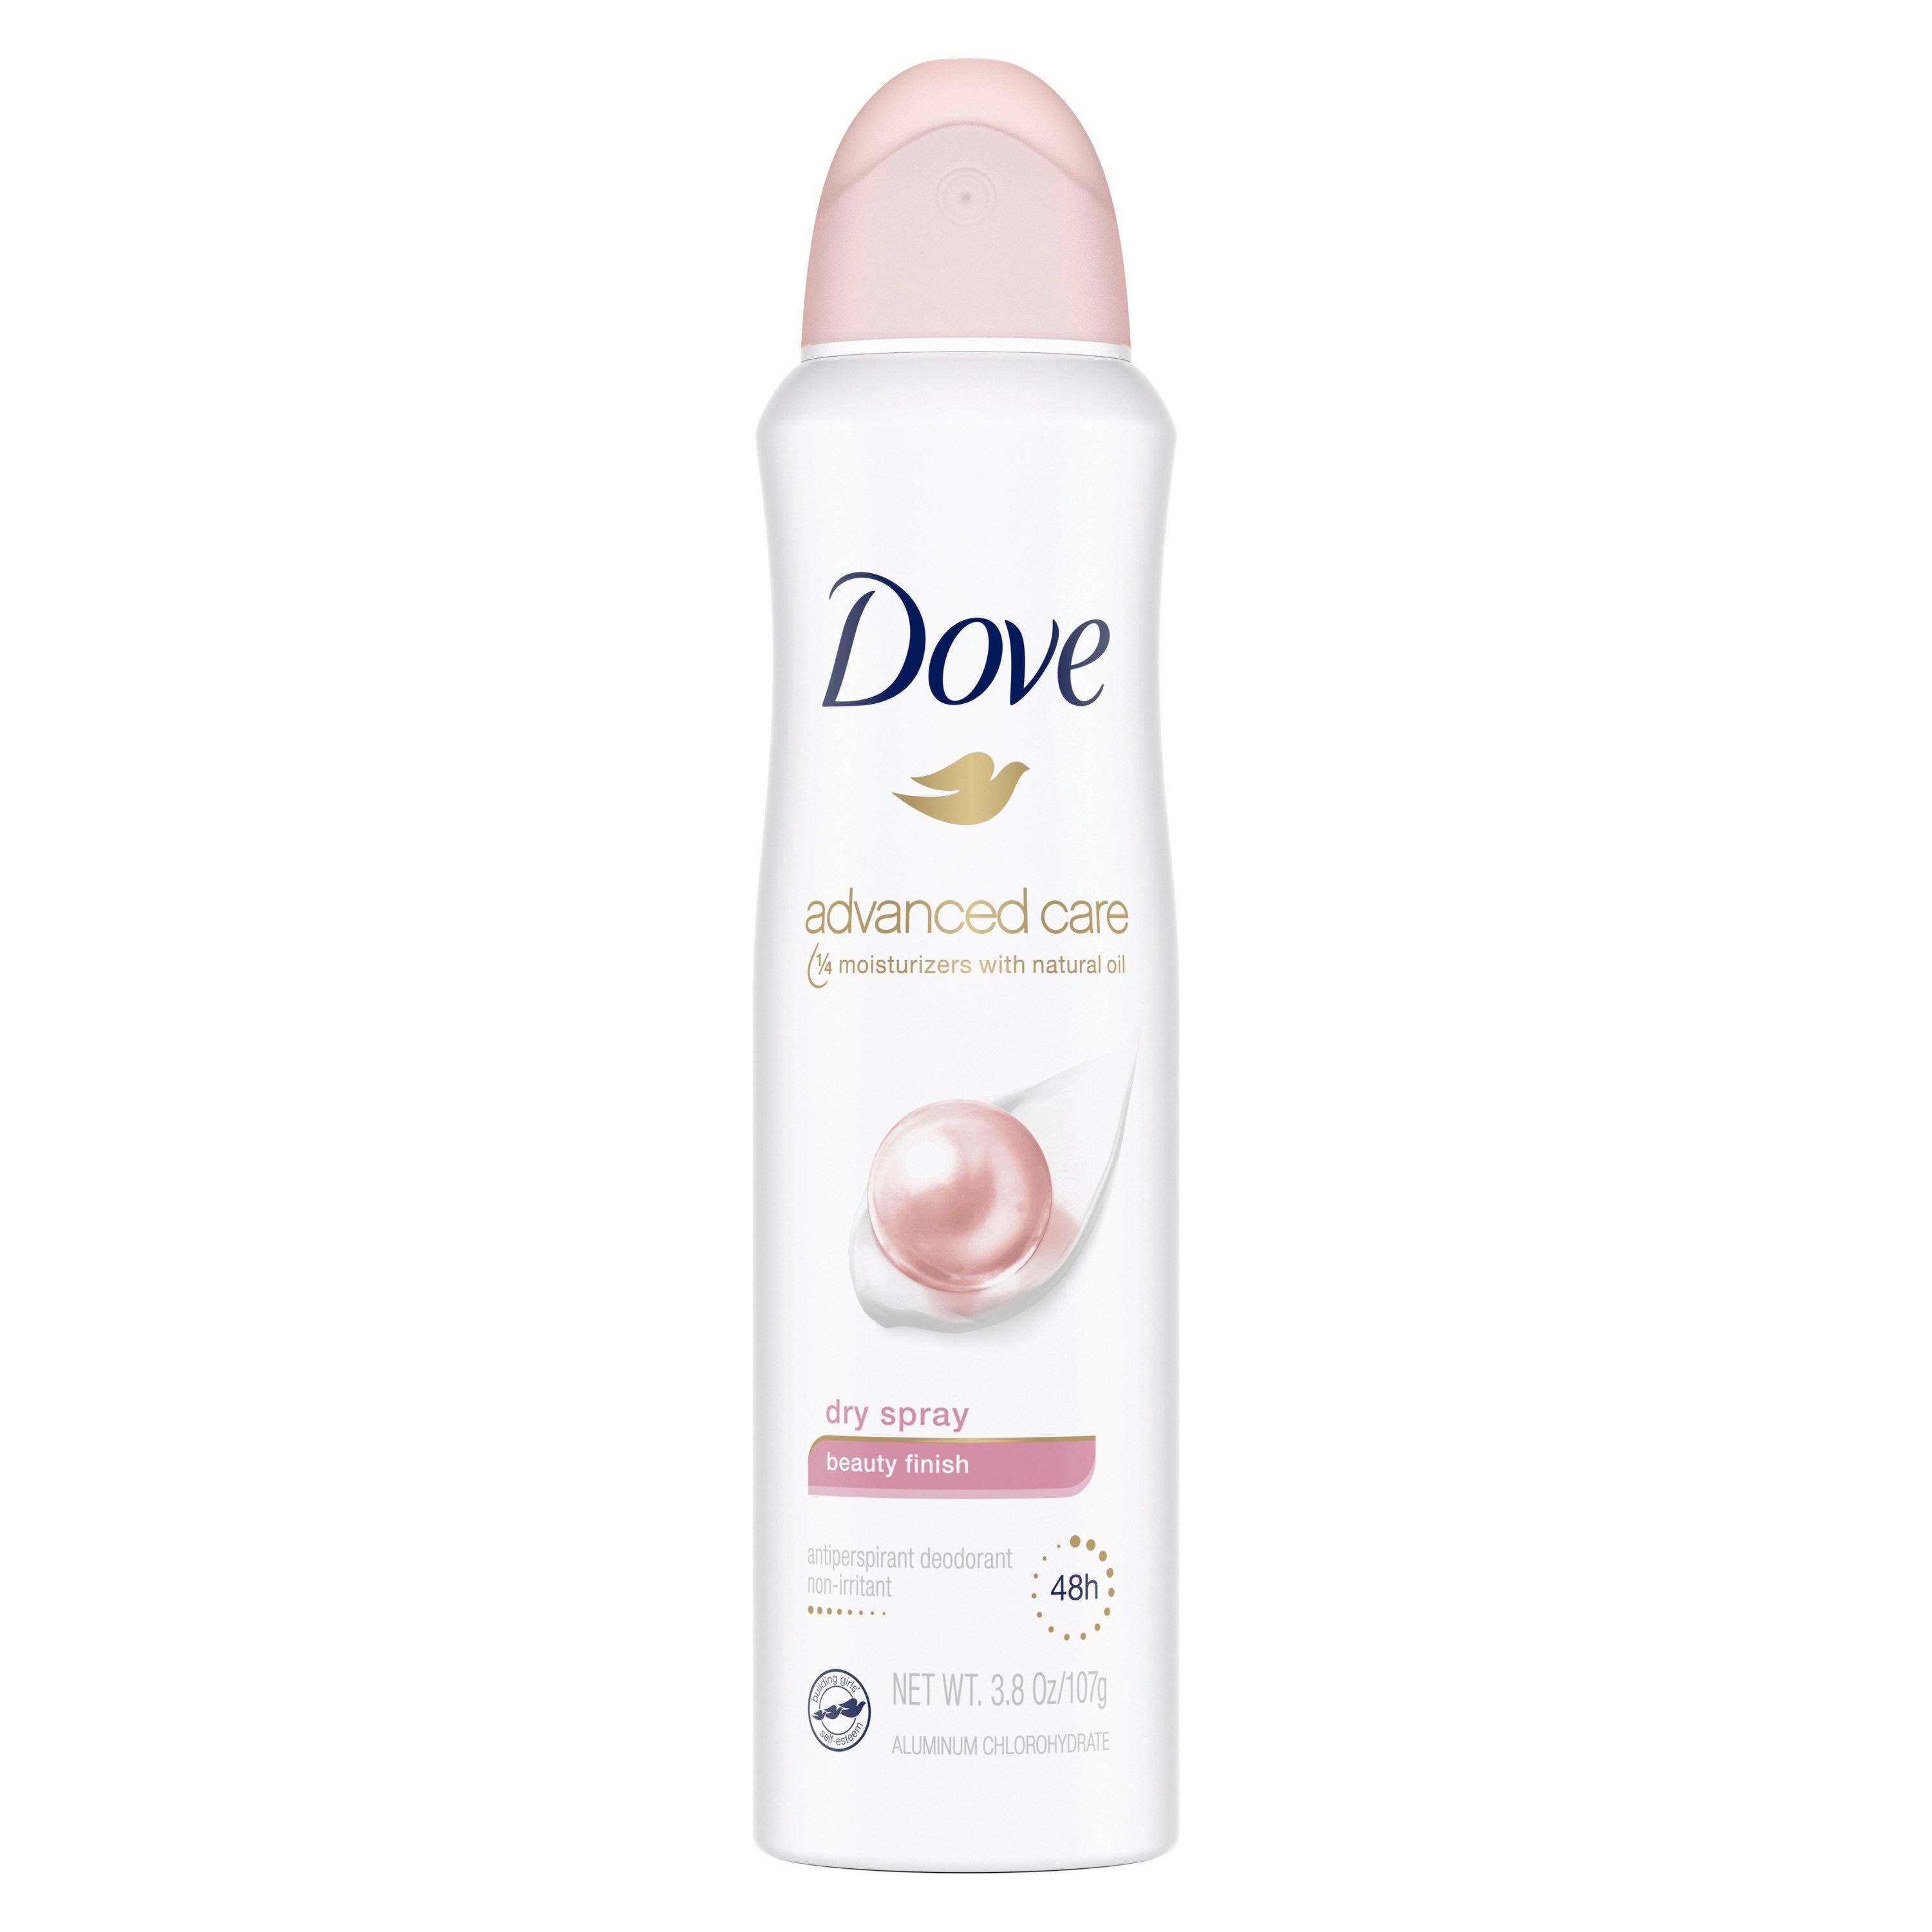 Dove Dry Spray Antiperspirant Deodorant - Beauty Finish, 3.8oz